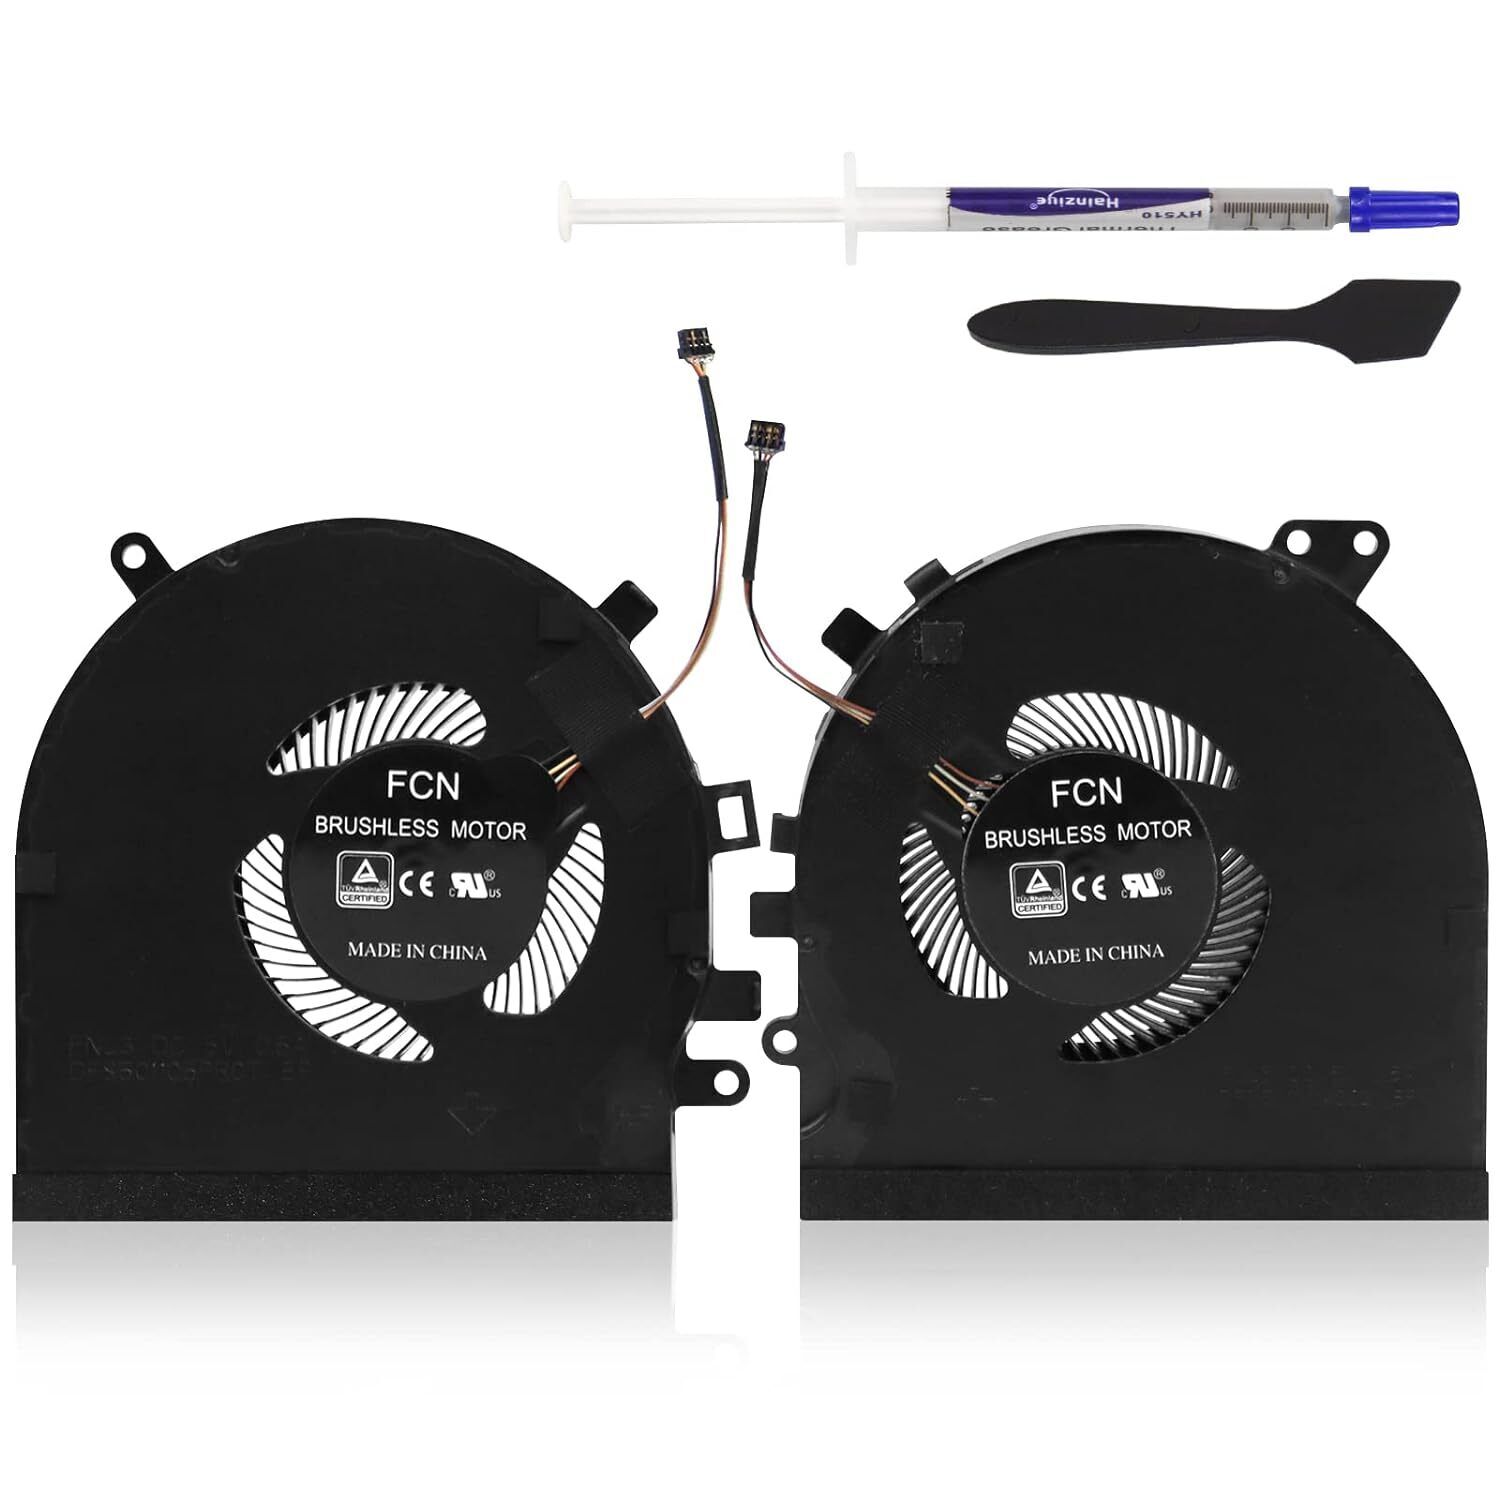 New Replacement Cpu+Gpu Cooling Fan For Razer Blade 15 Rz09-0270 Rz09-02705E76